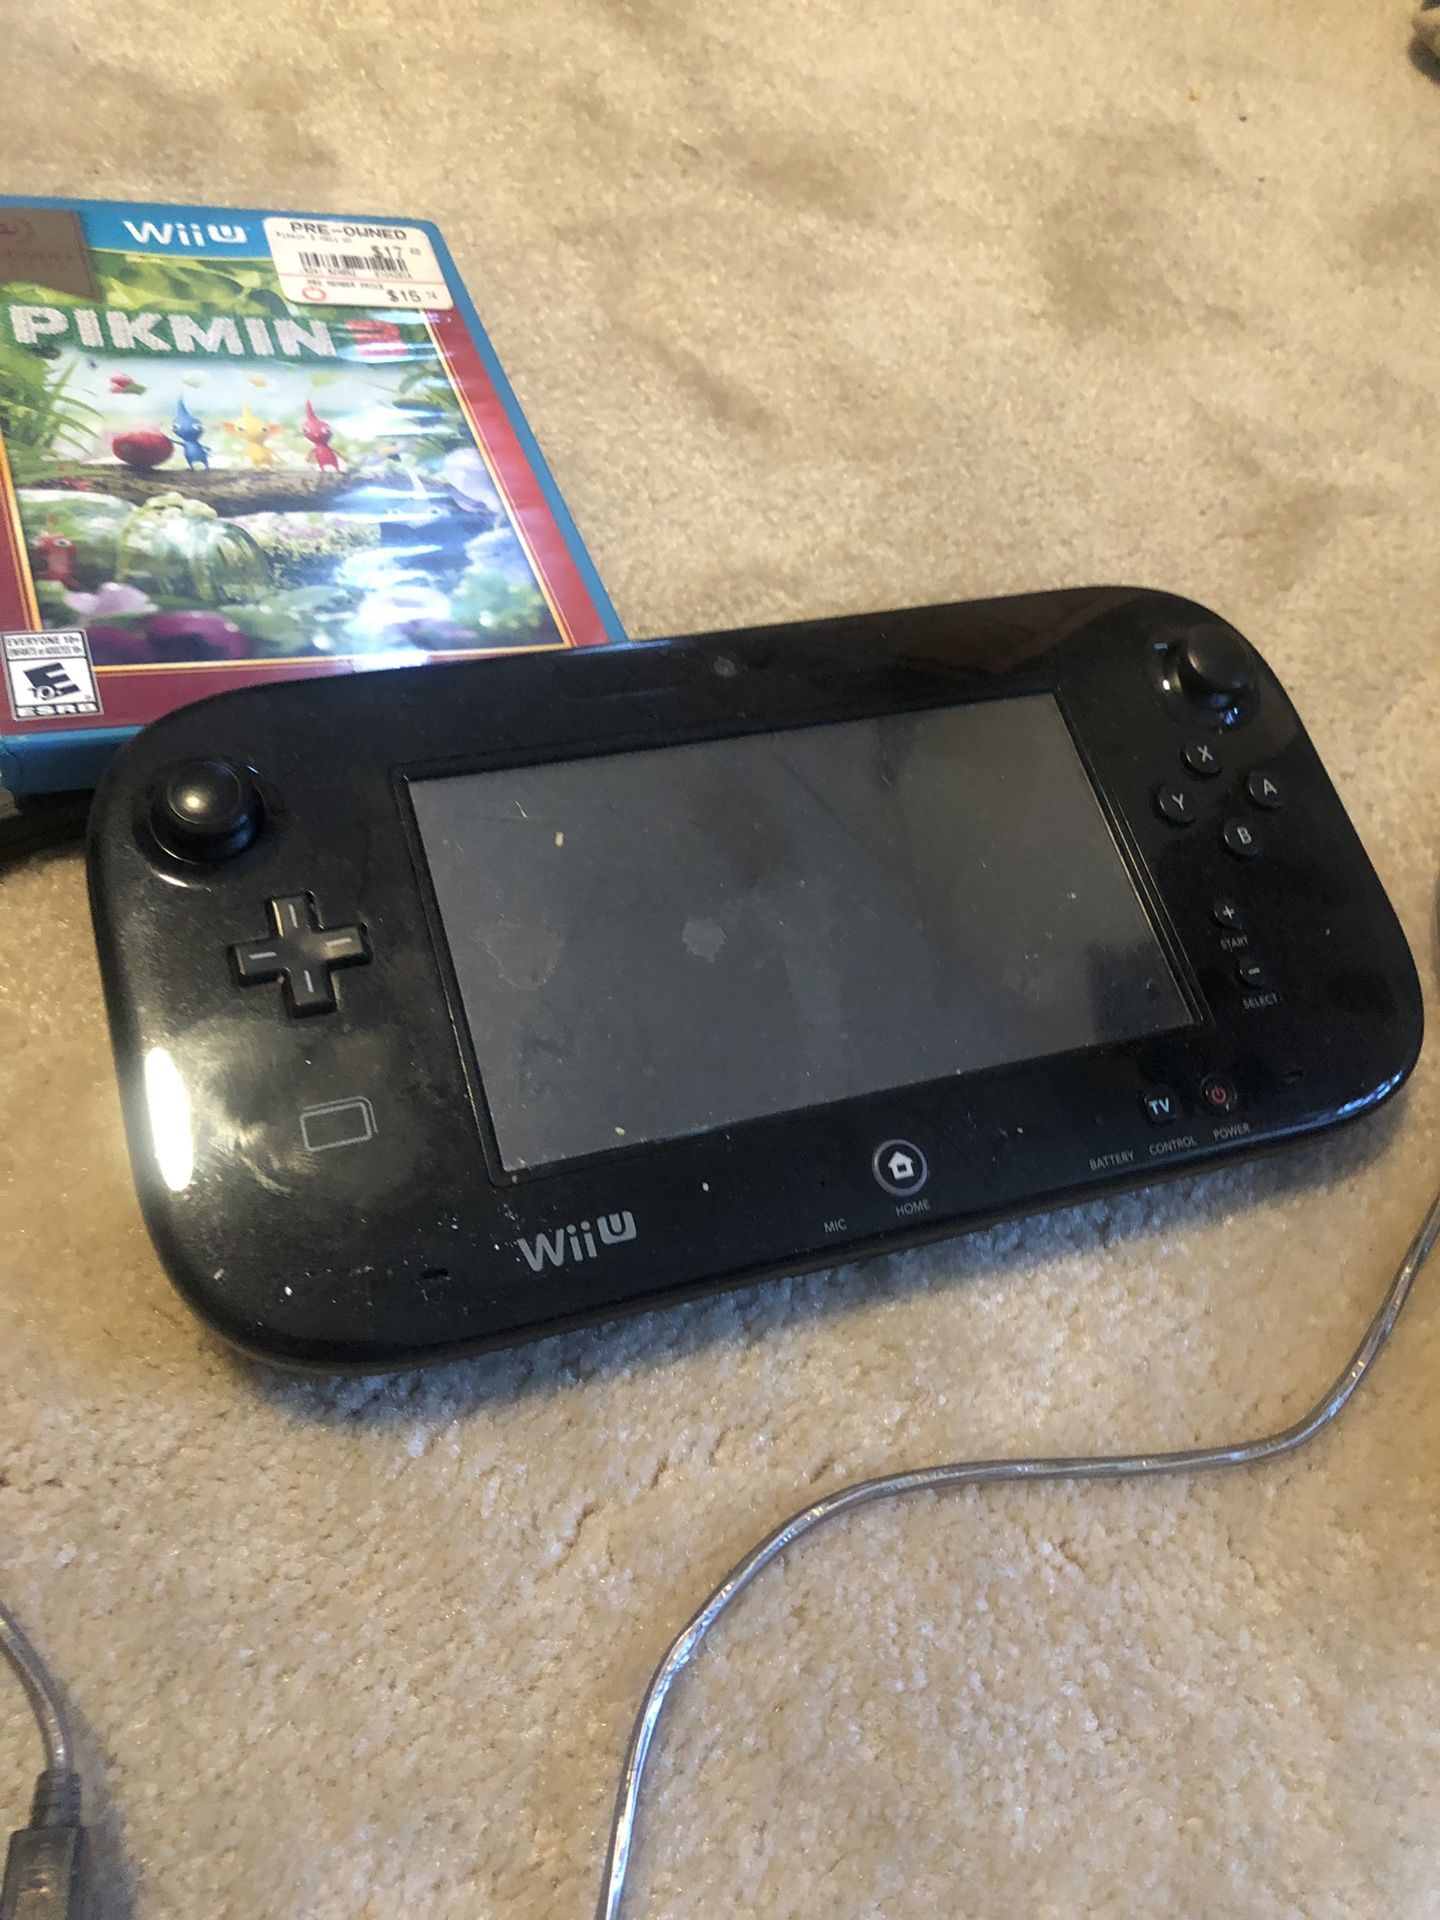 Nintendo Wii U lots of games Great condition!